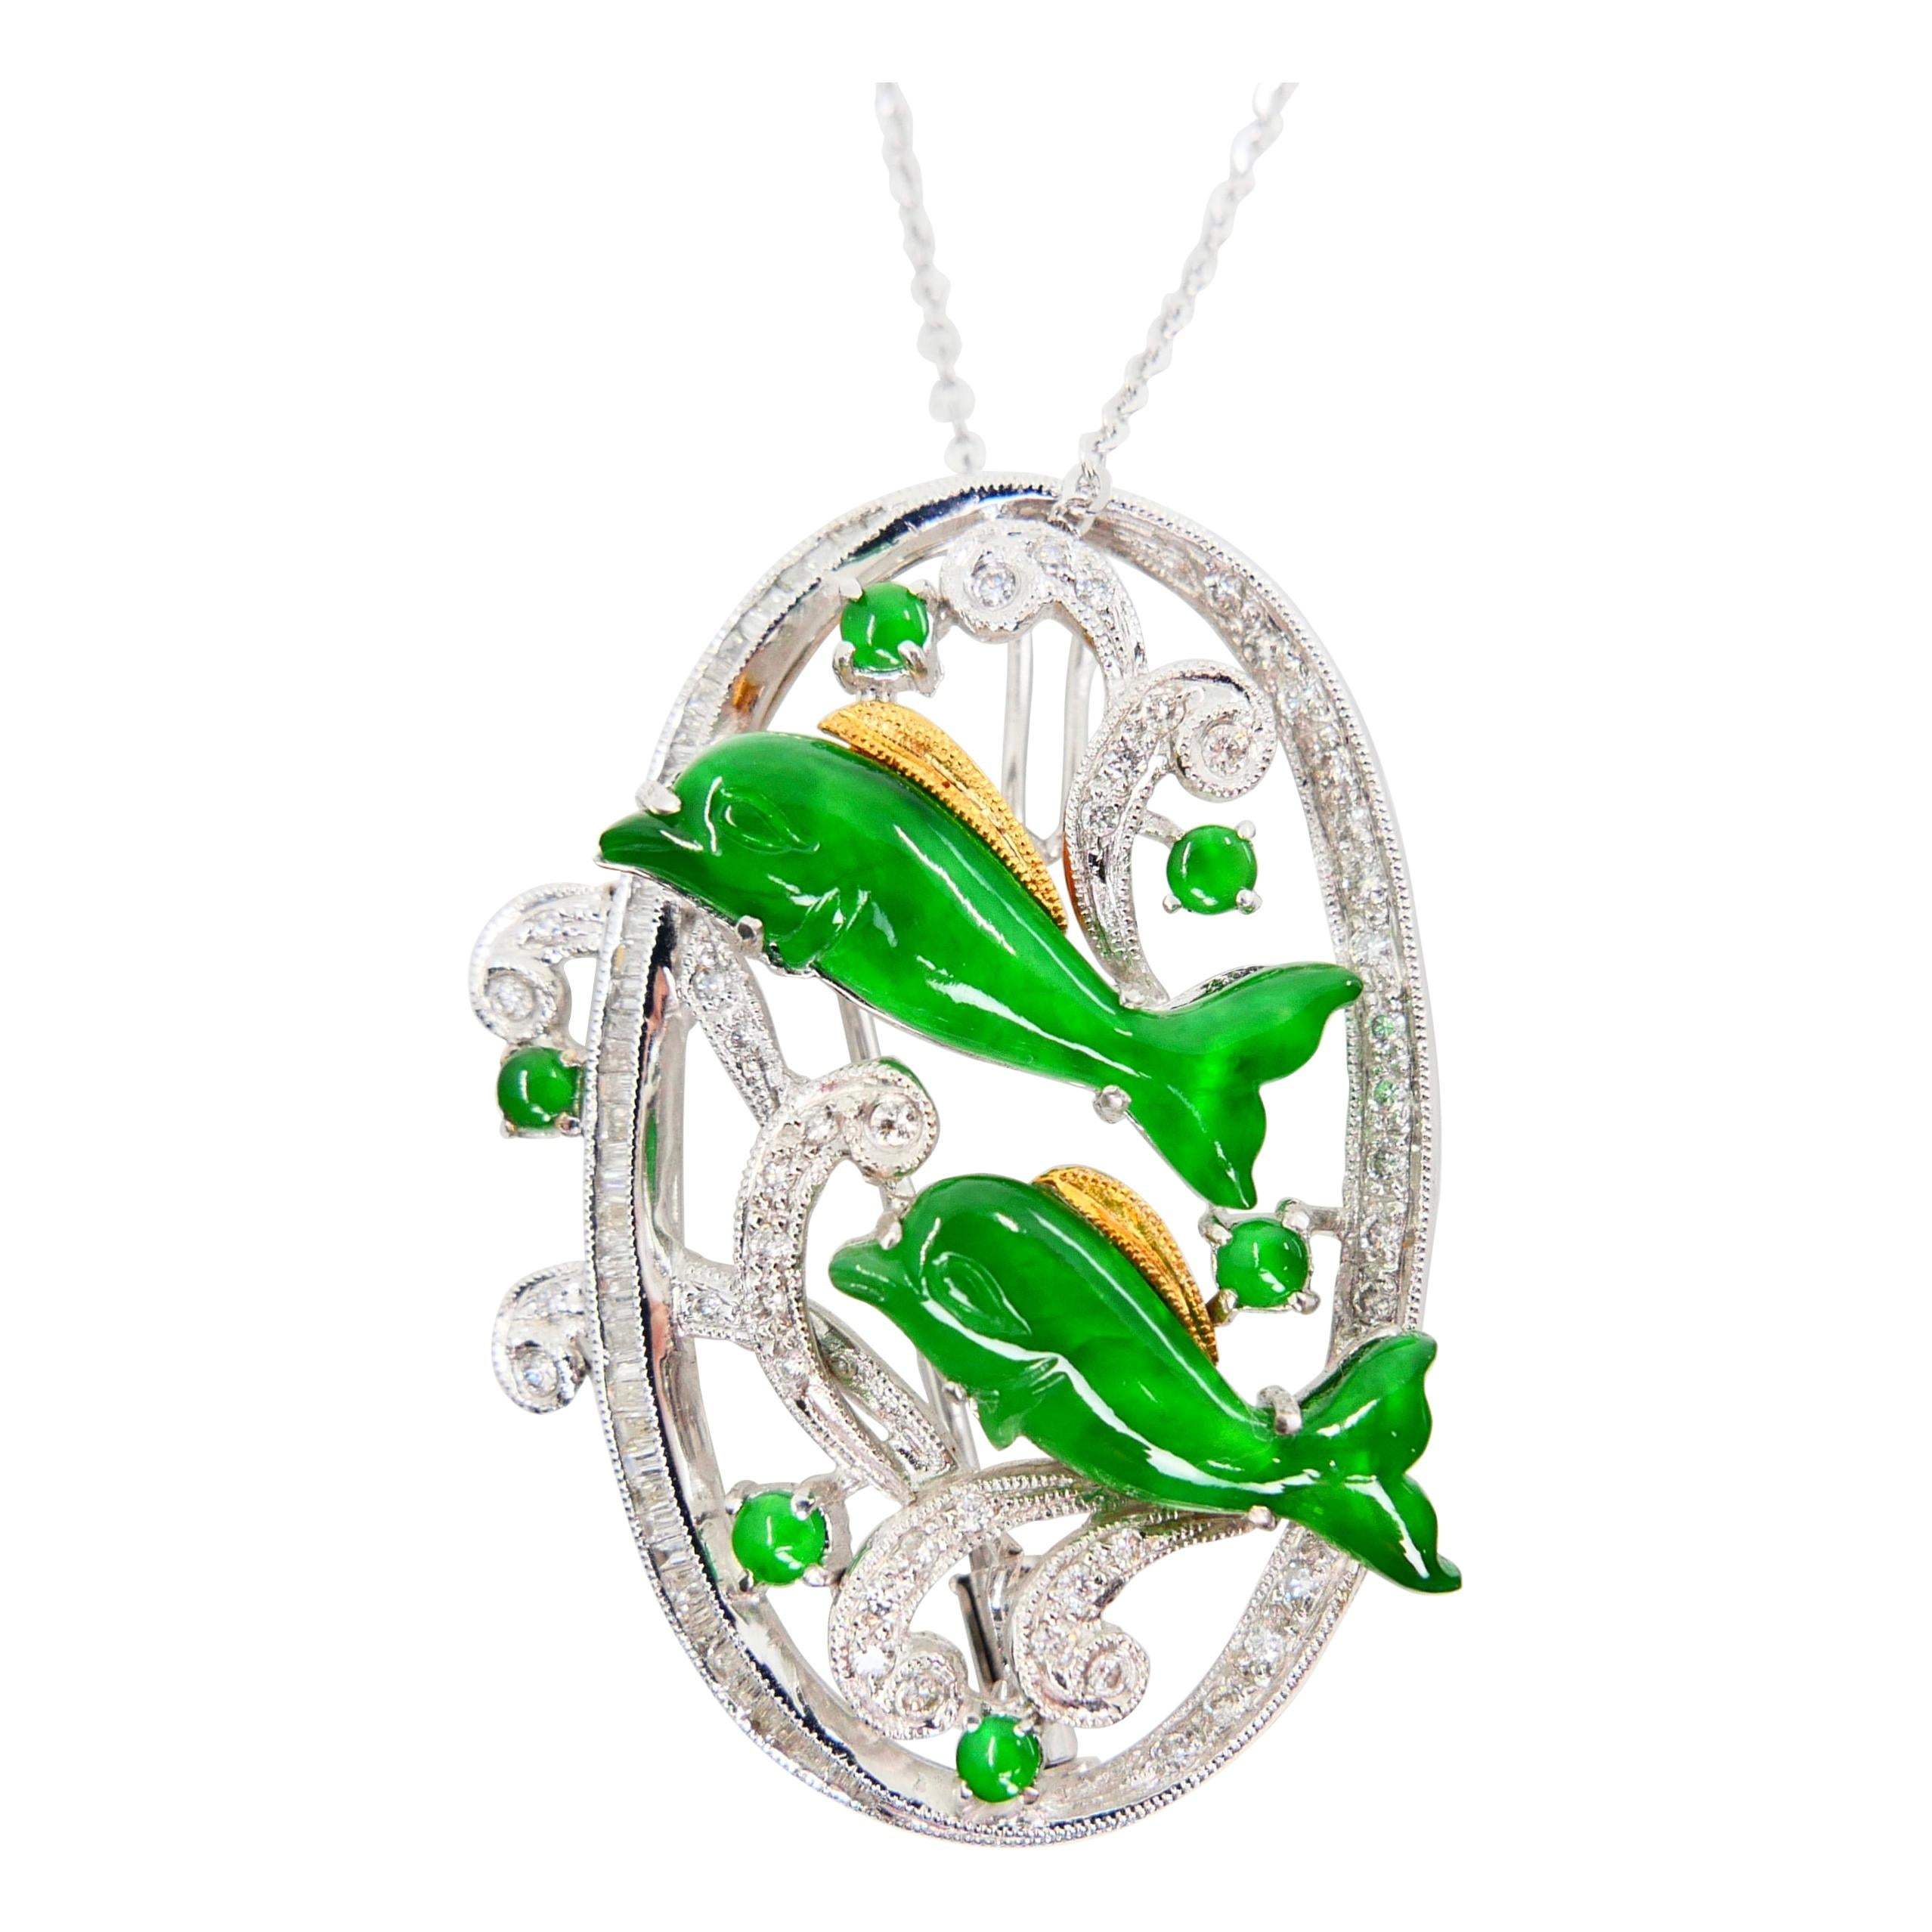 Broche pendentif en diamants et jade naturel certifié vert pomme vif, avec dauphins en vente